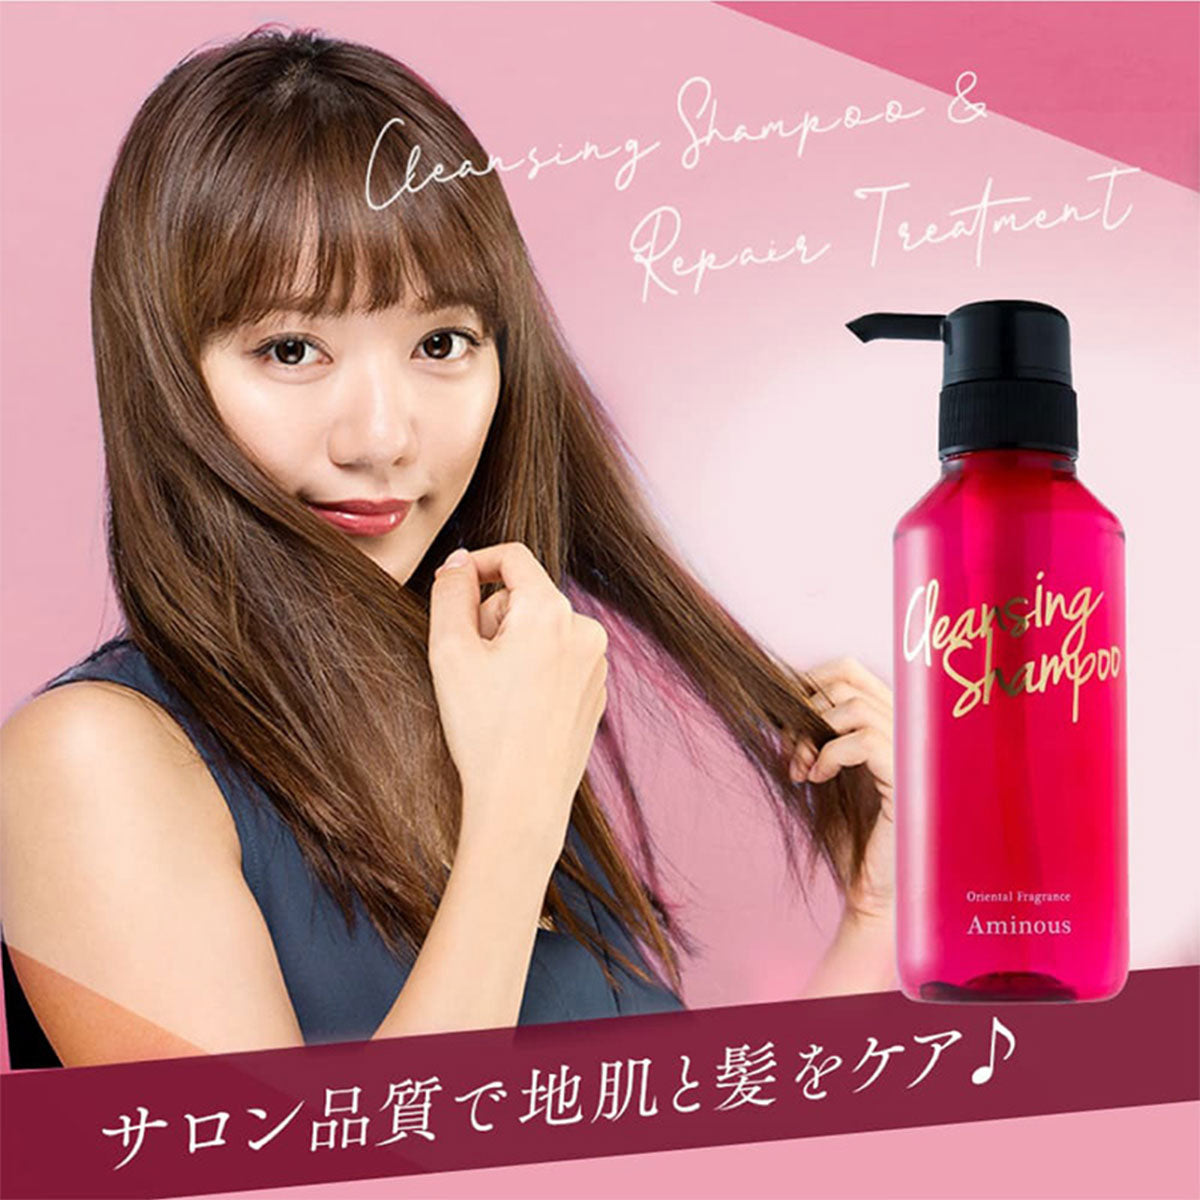 Aminous Oriental Fragrance Cleansing Shampoo 300ml